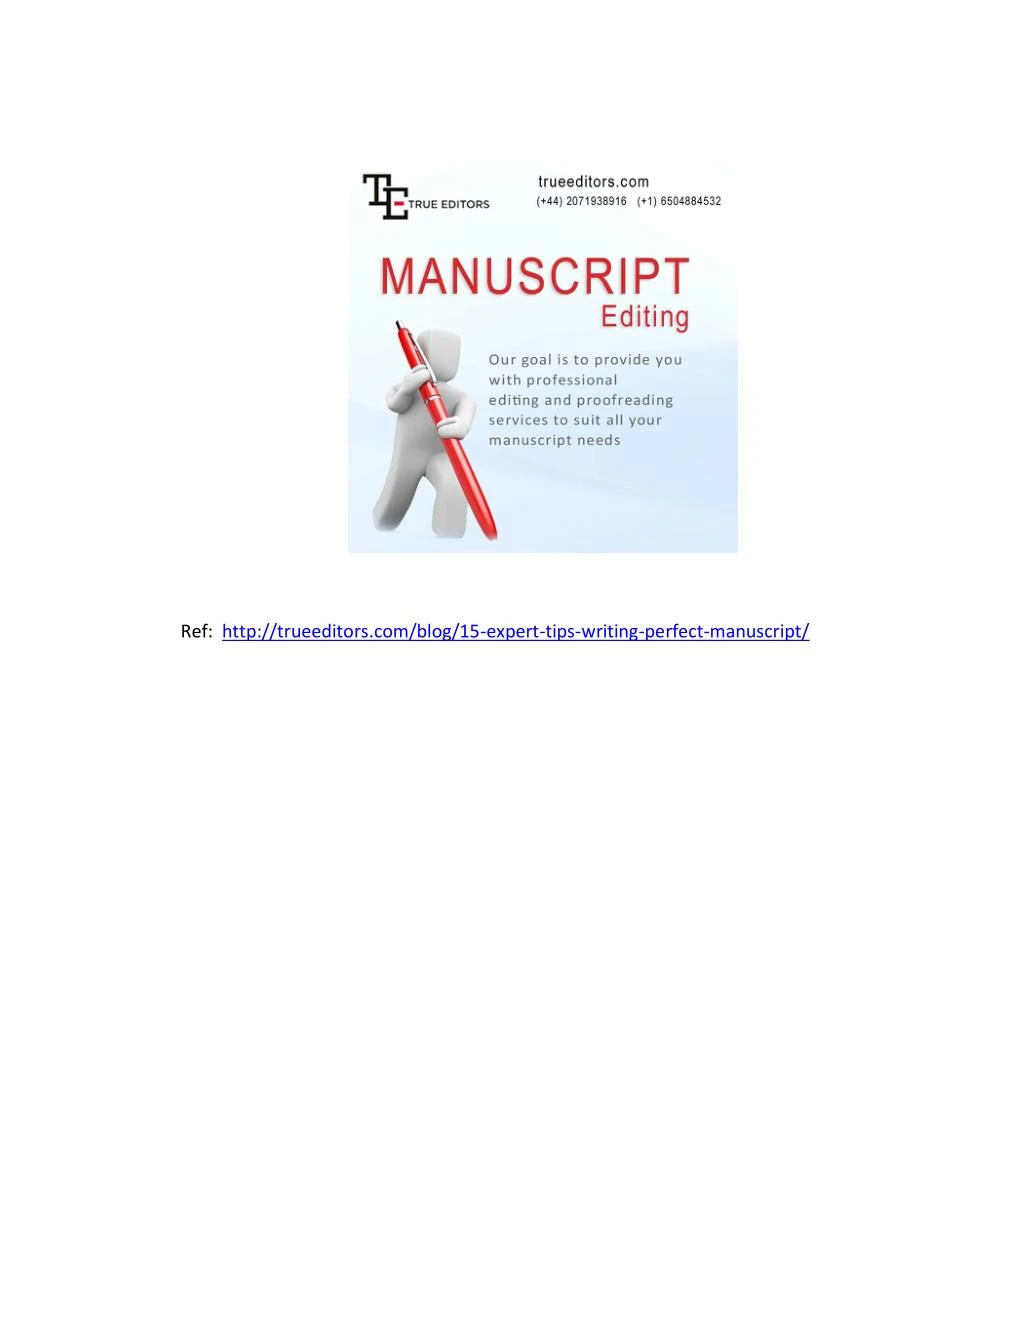 Manuscript proofreading services